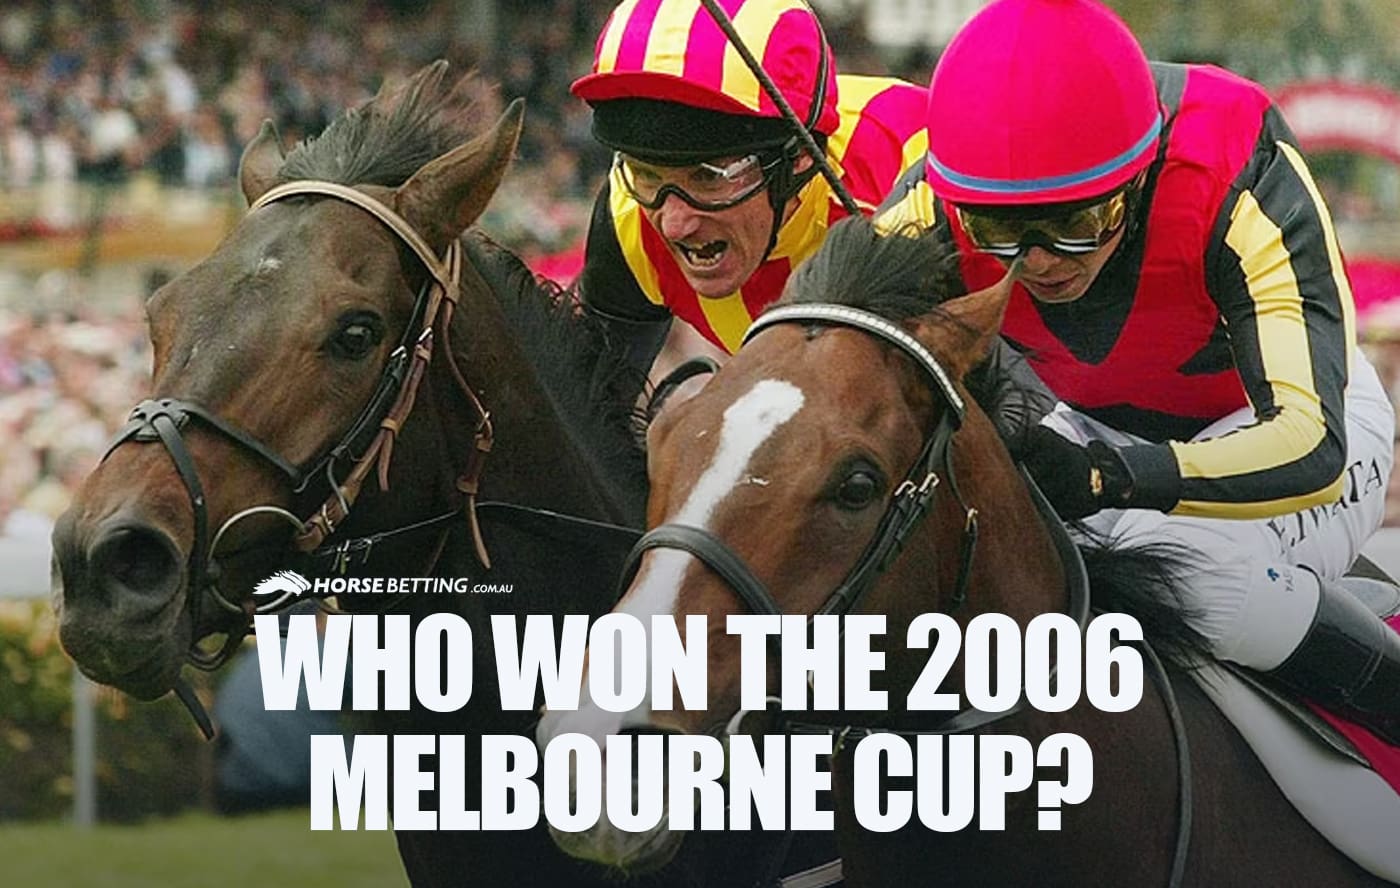 2006 Melbourne Cup winner